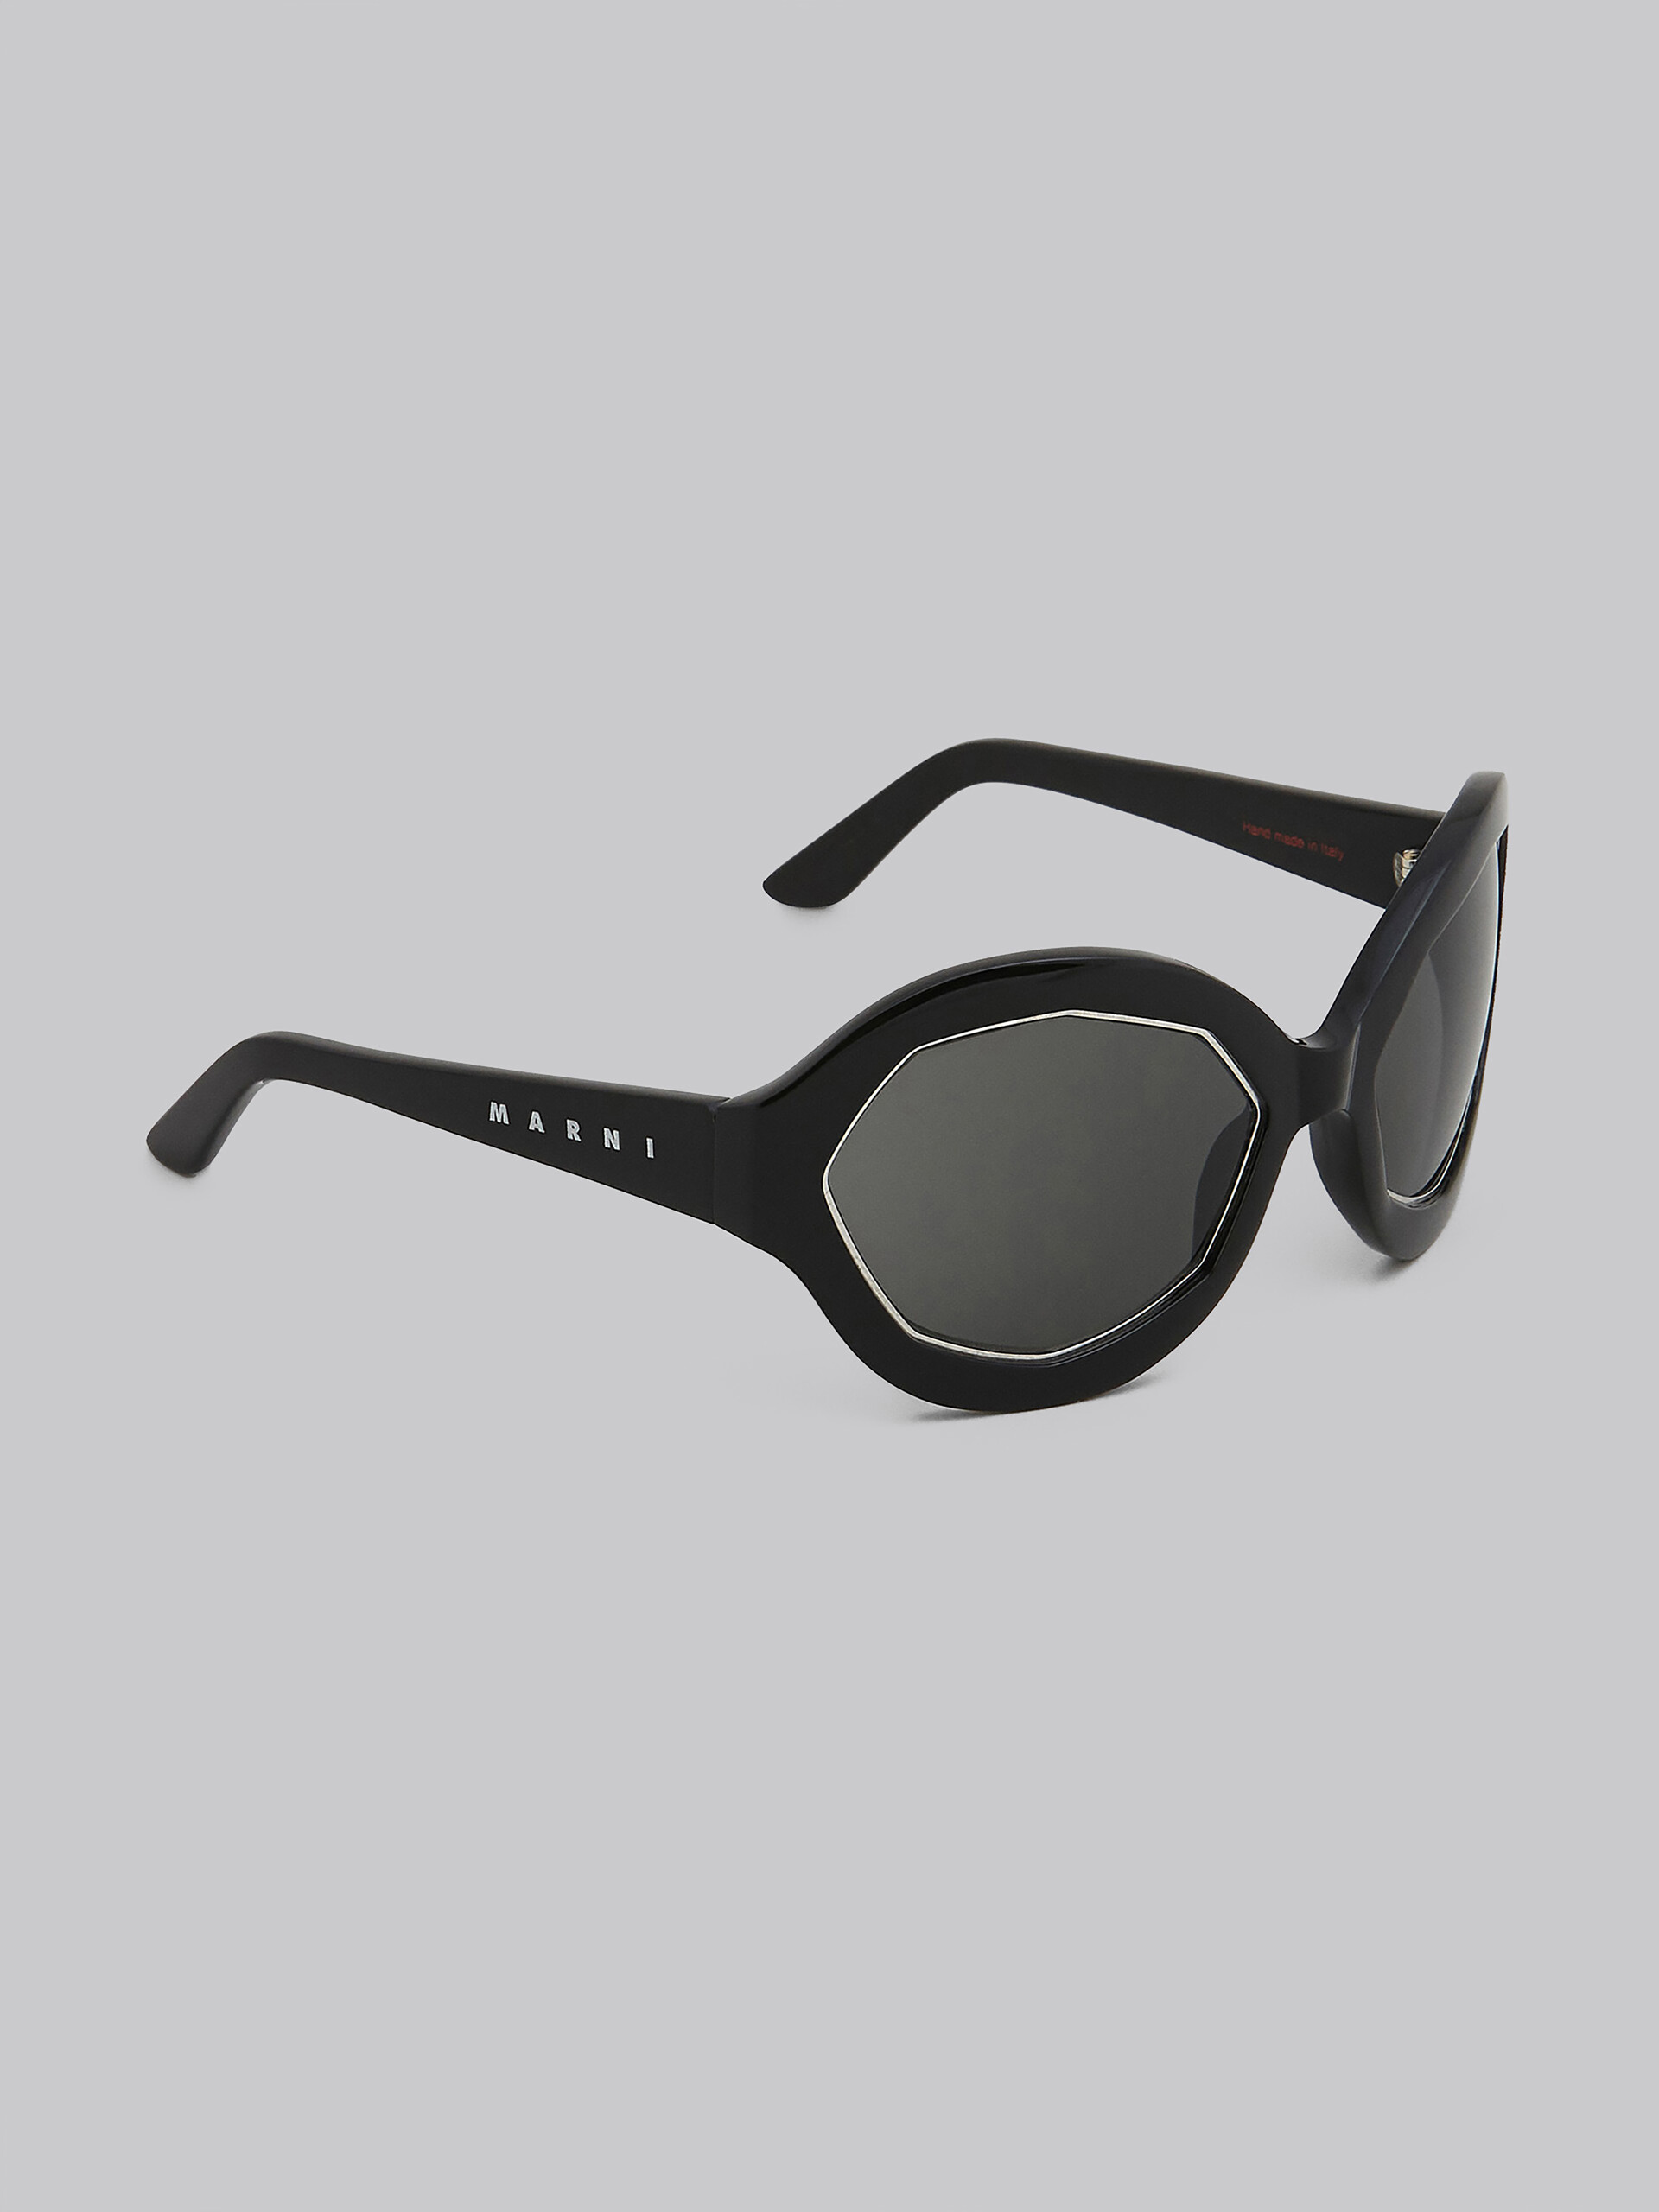 CUMULUS CLOUD black acetate and nylon sunglasses - Optical - Image 3